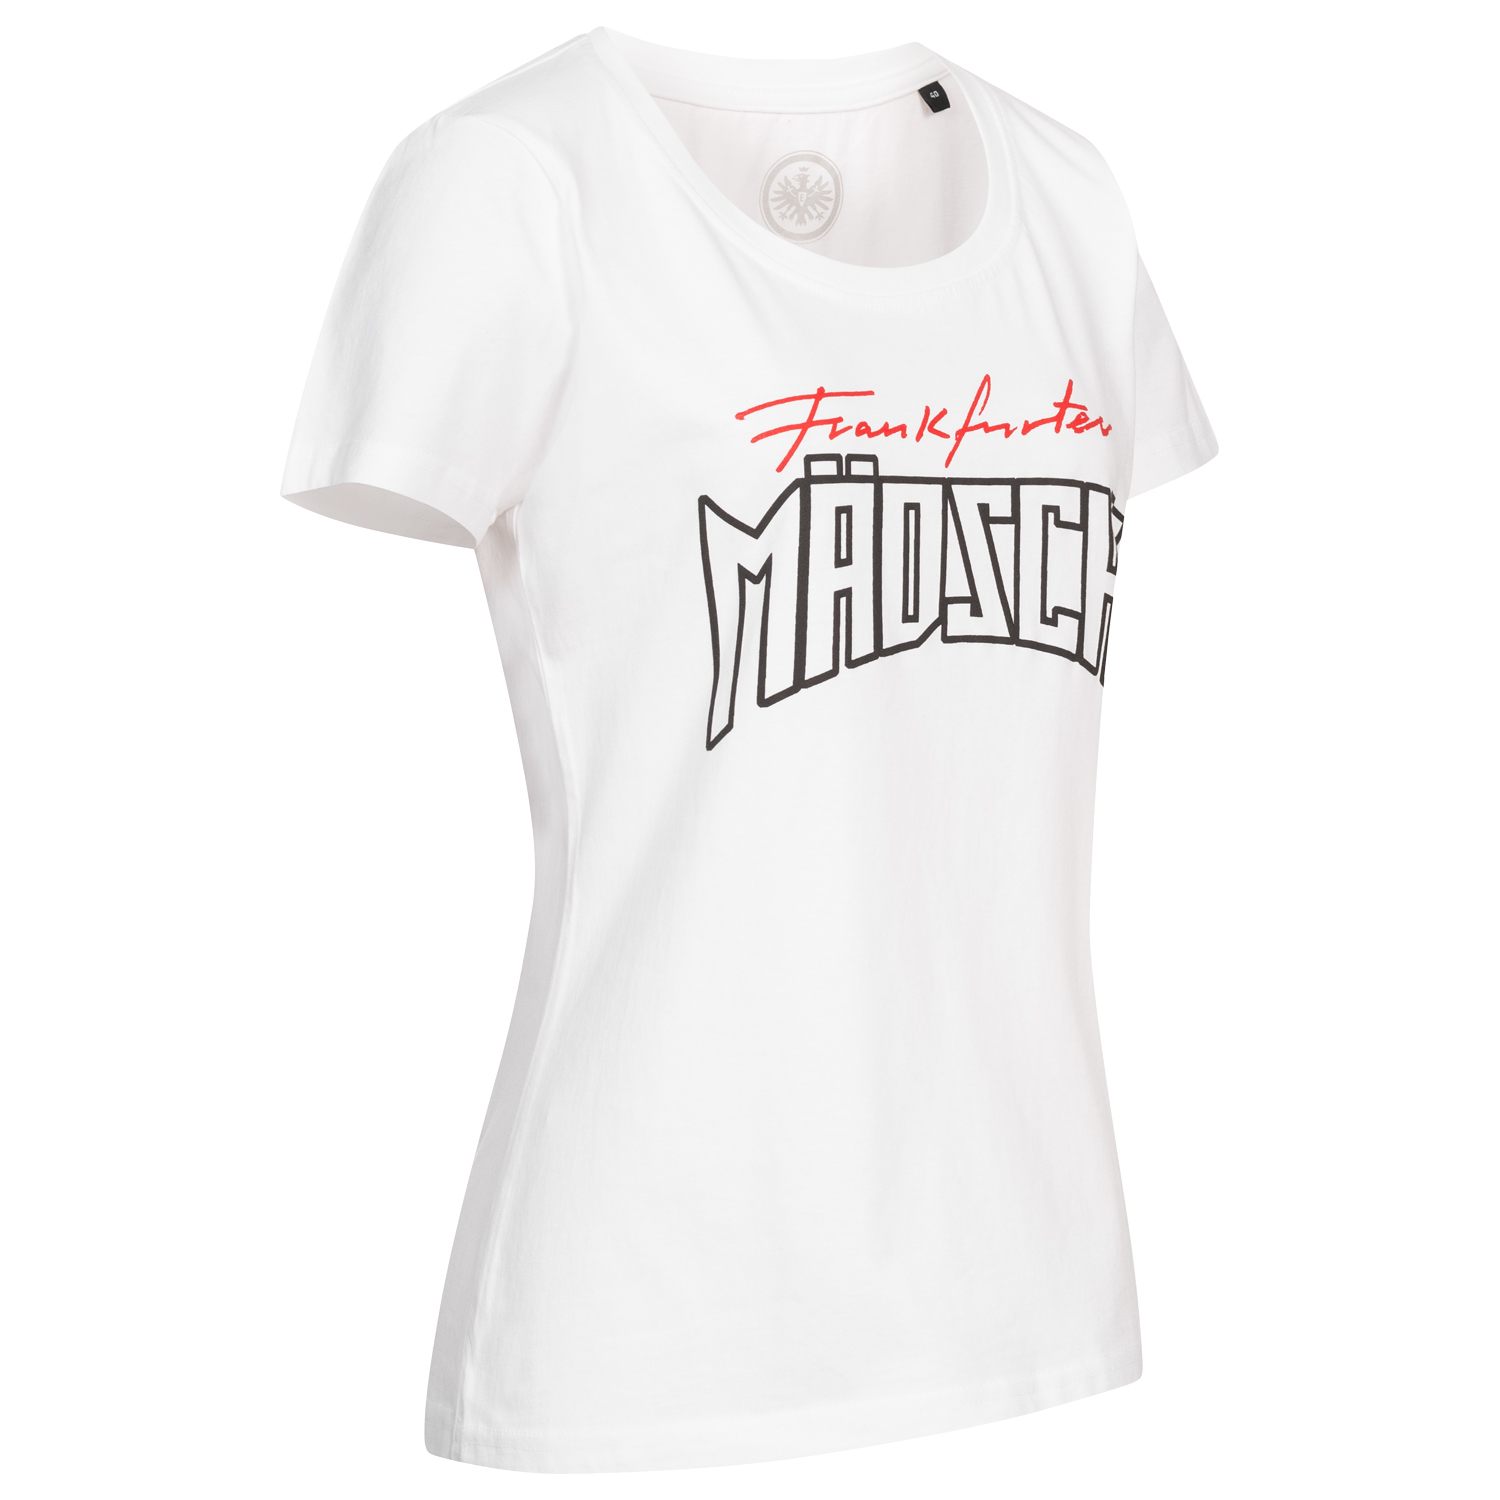 Bild 4: Damen T-Shirt Frankfurter Mädsche